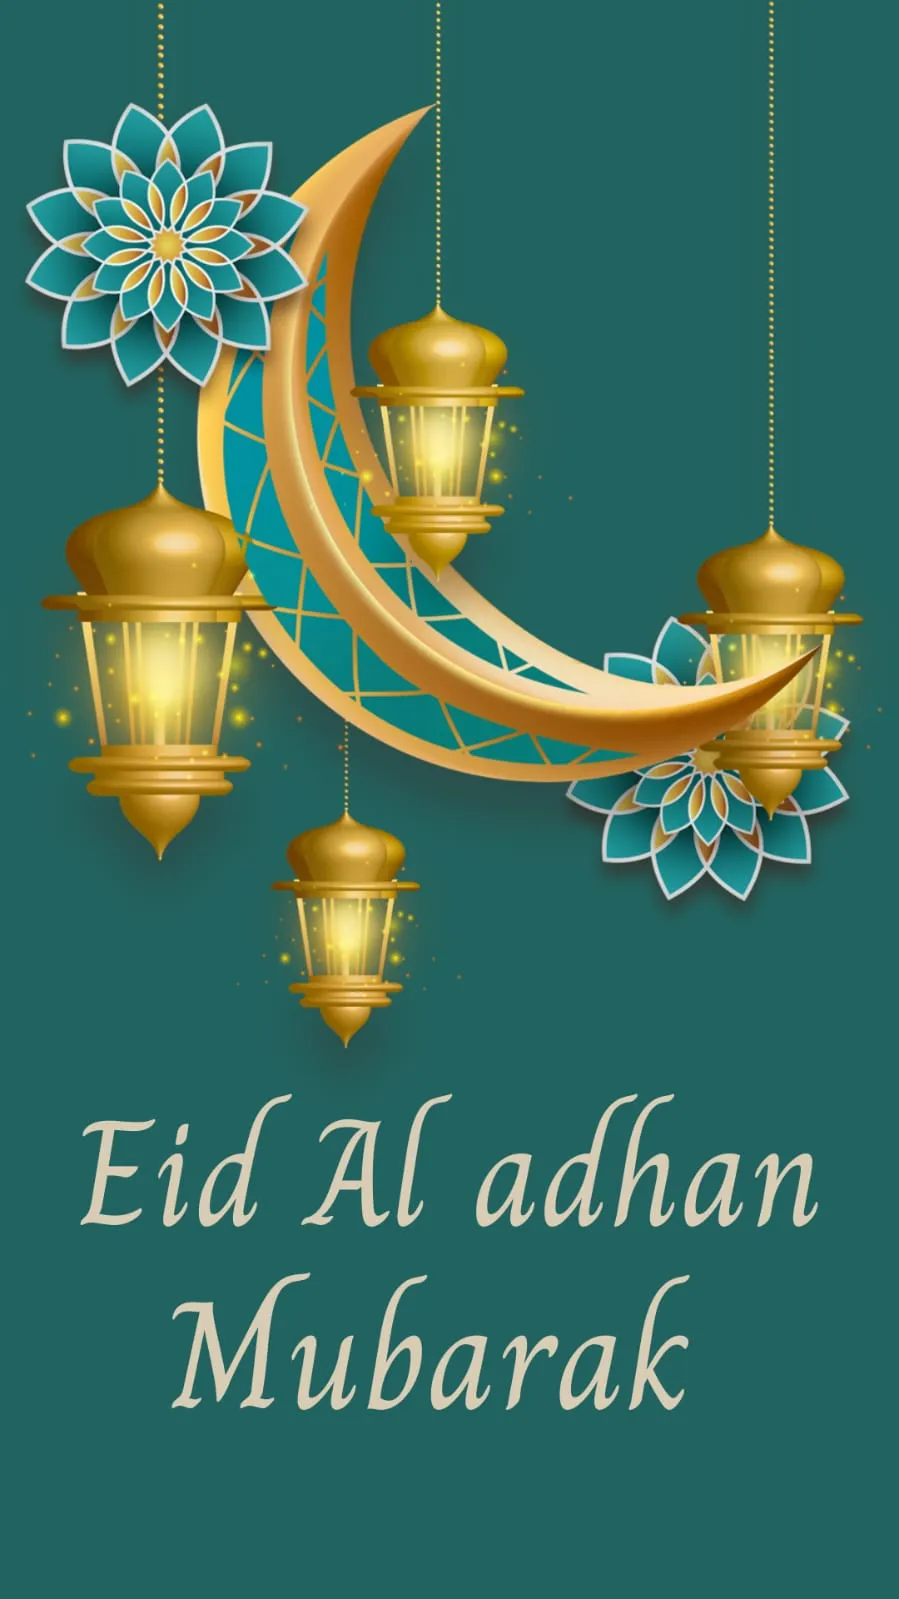 Eid Al Adhan Mubarak Images